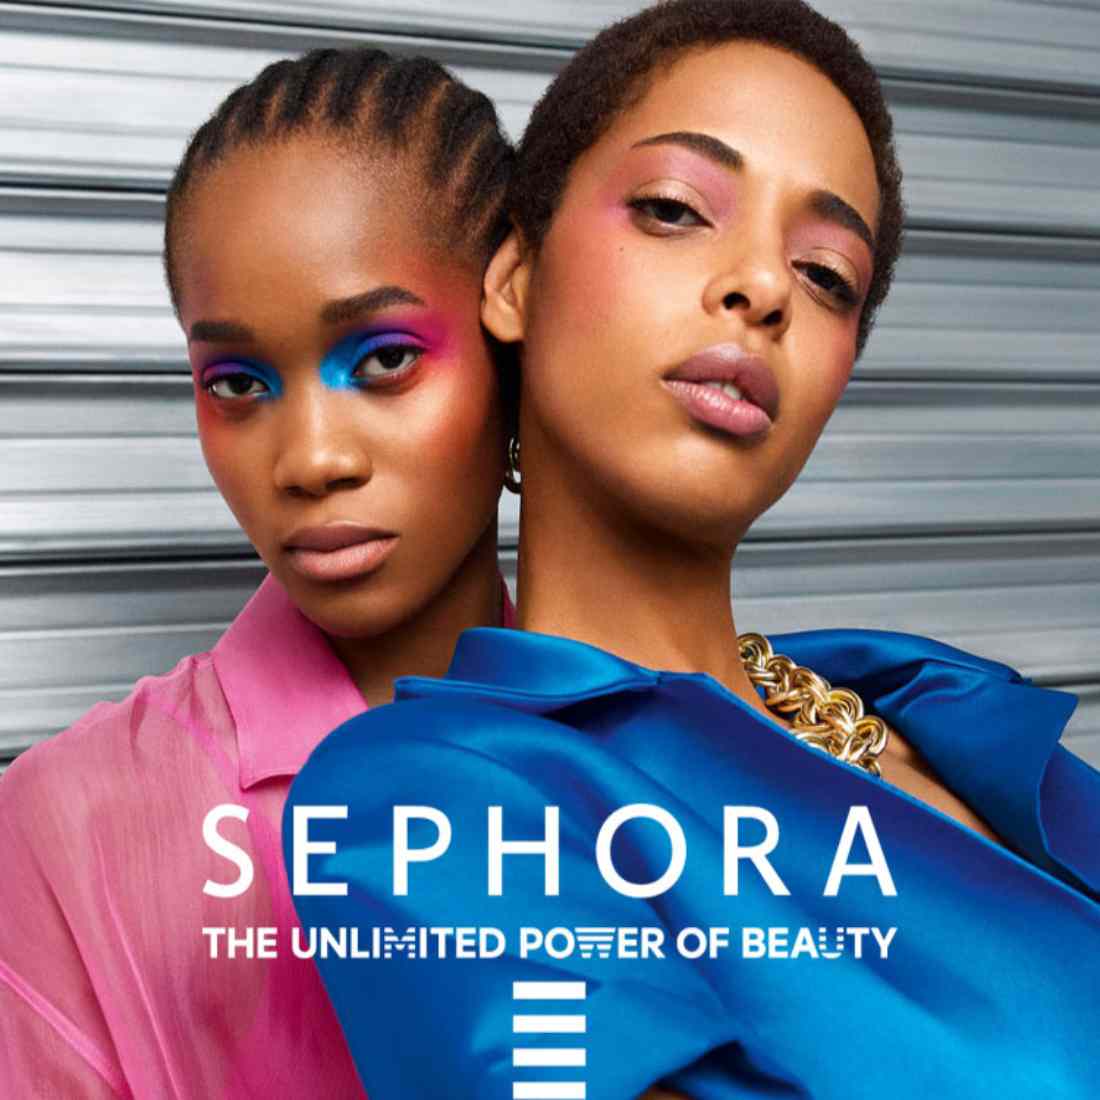 Zalando - e - Sephora - partnership - beauty - experience - Pianetadonne